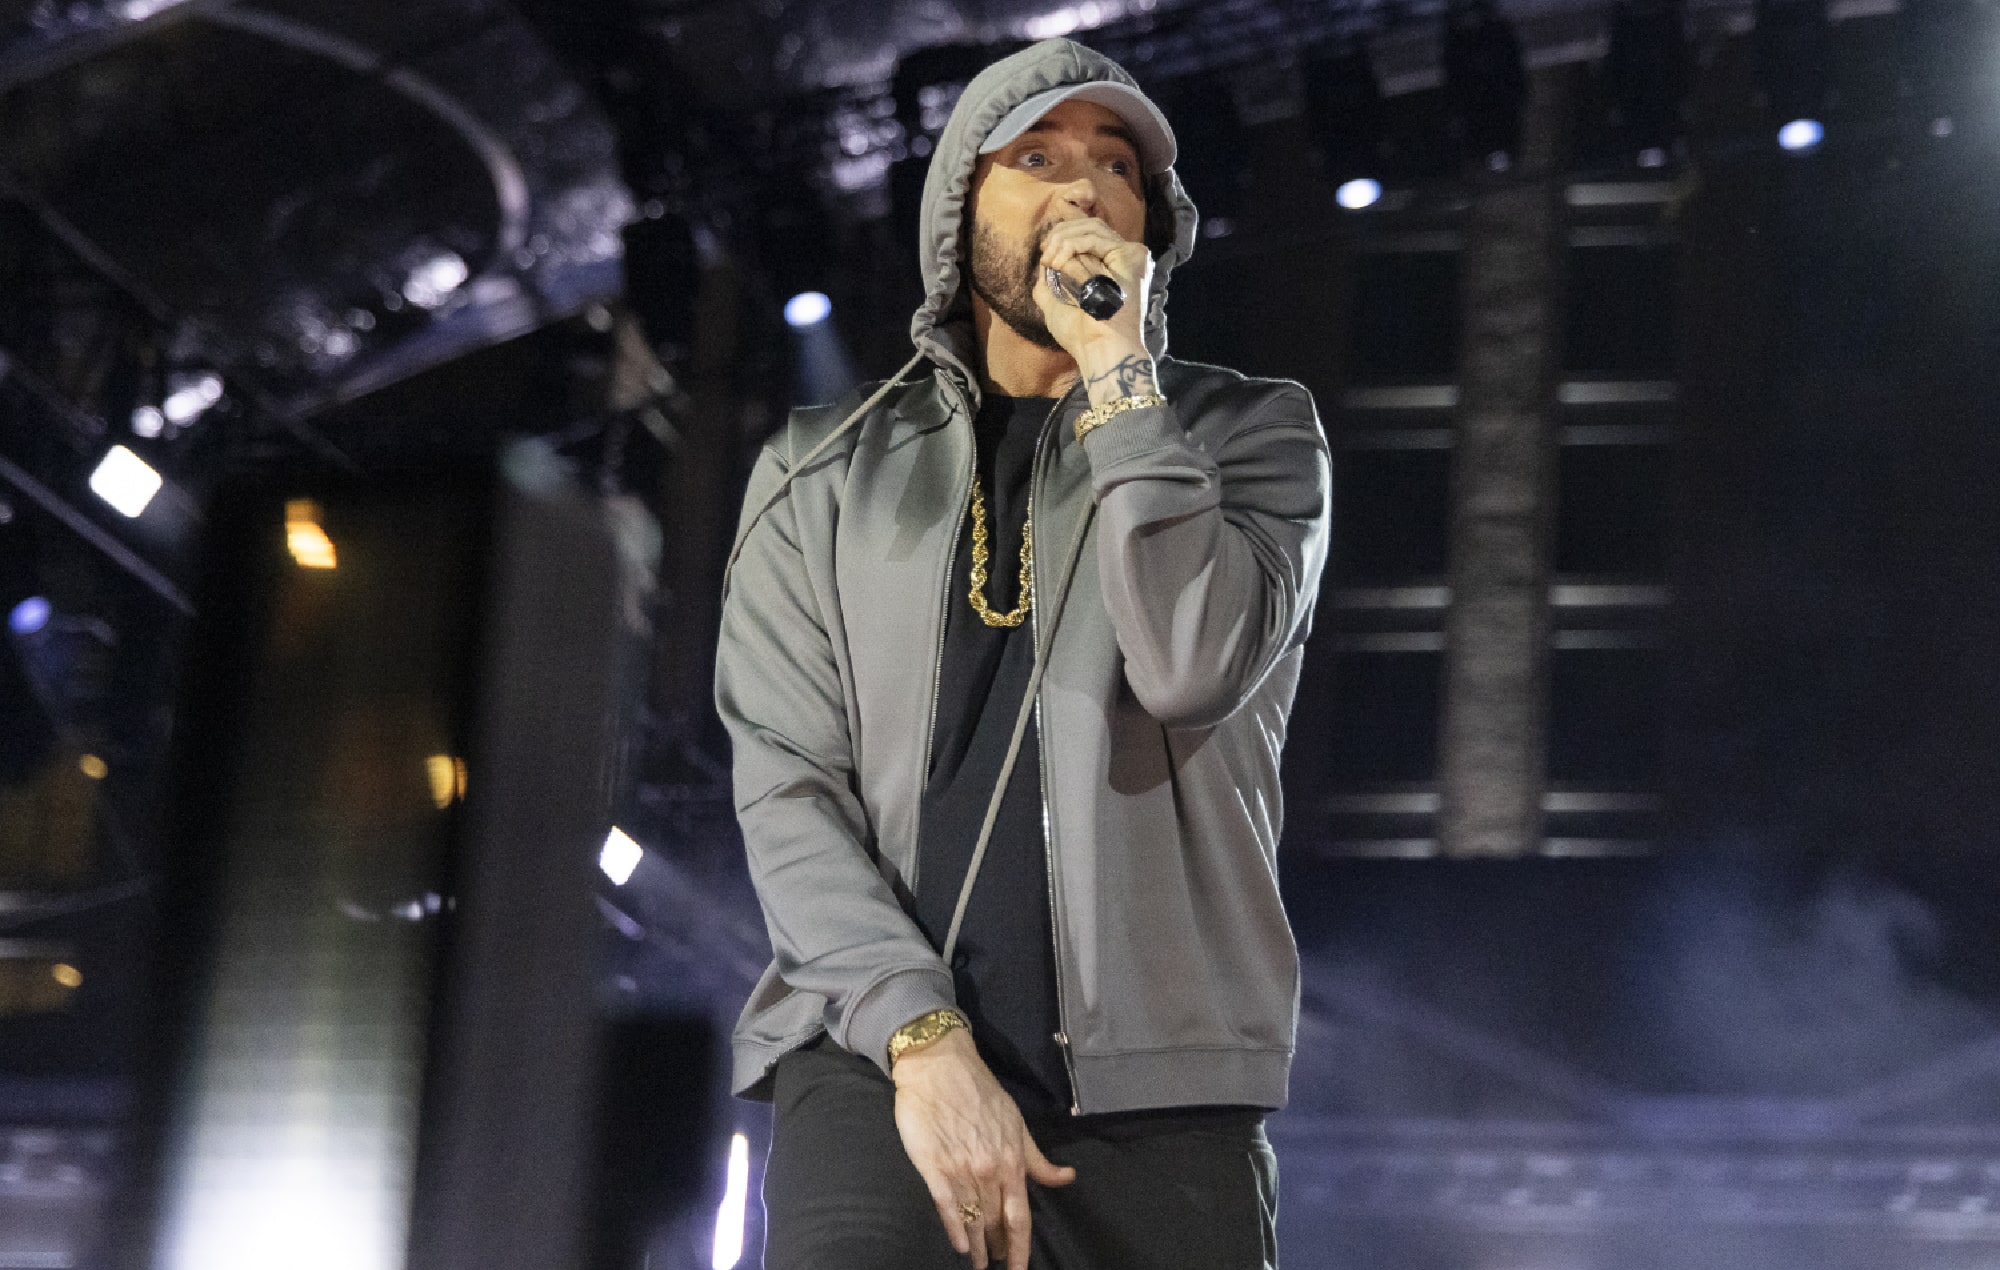 Eminem drops trailer teasing new single ‘Tobey’ featuring Big Sean and BabyTron